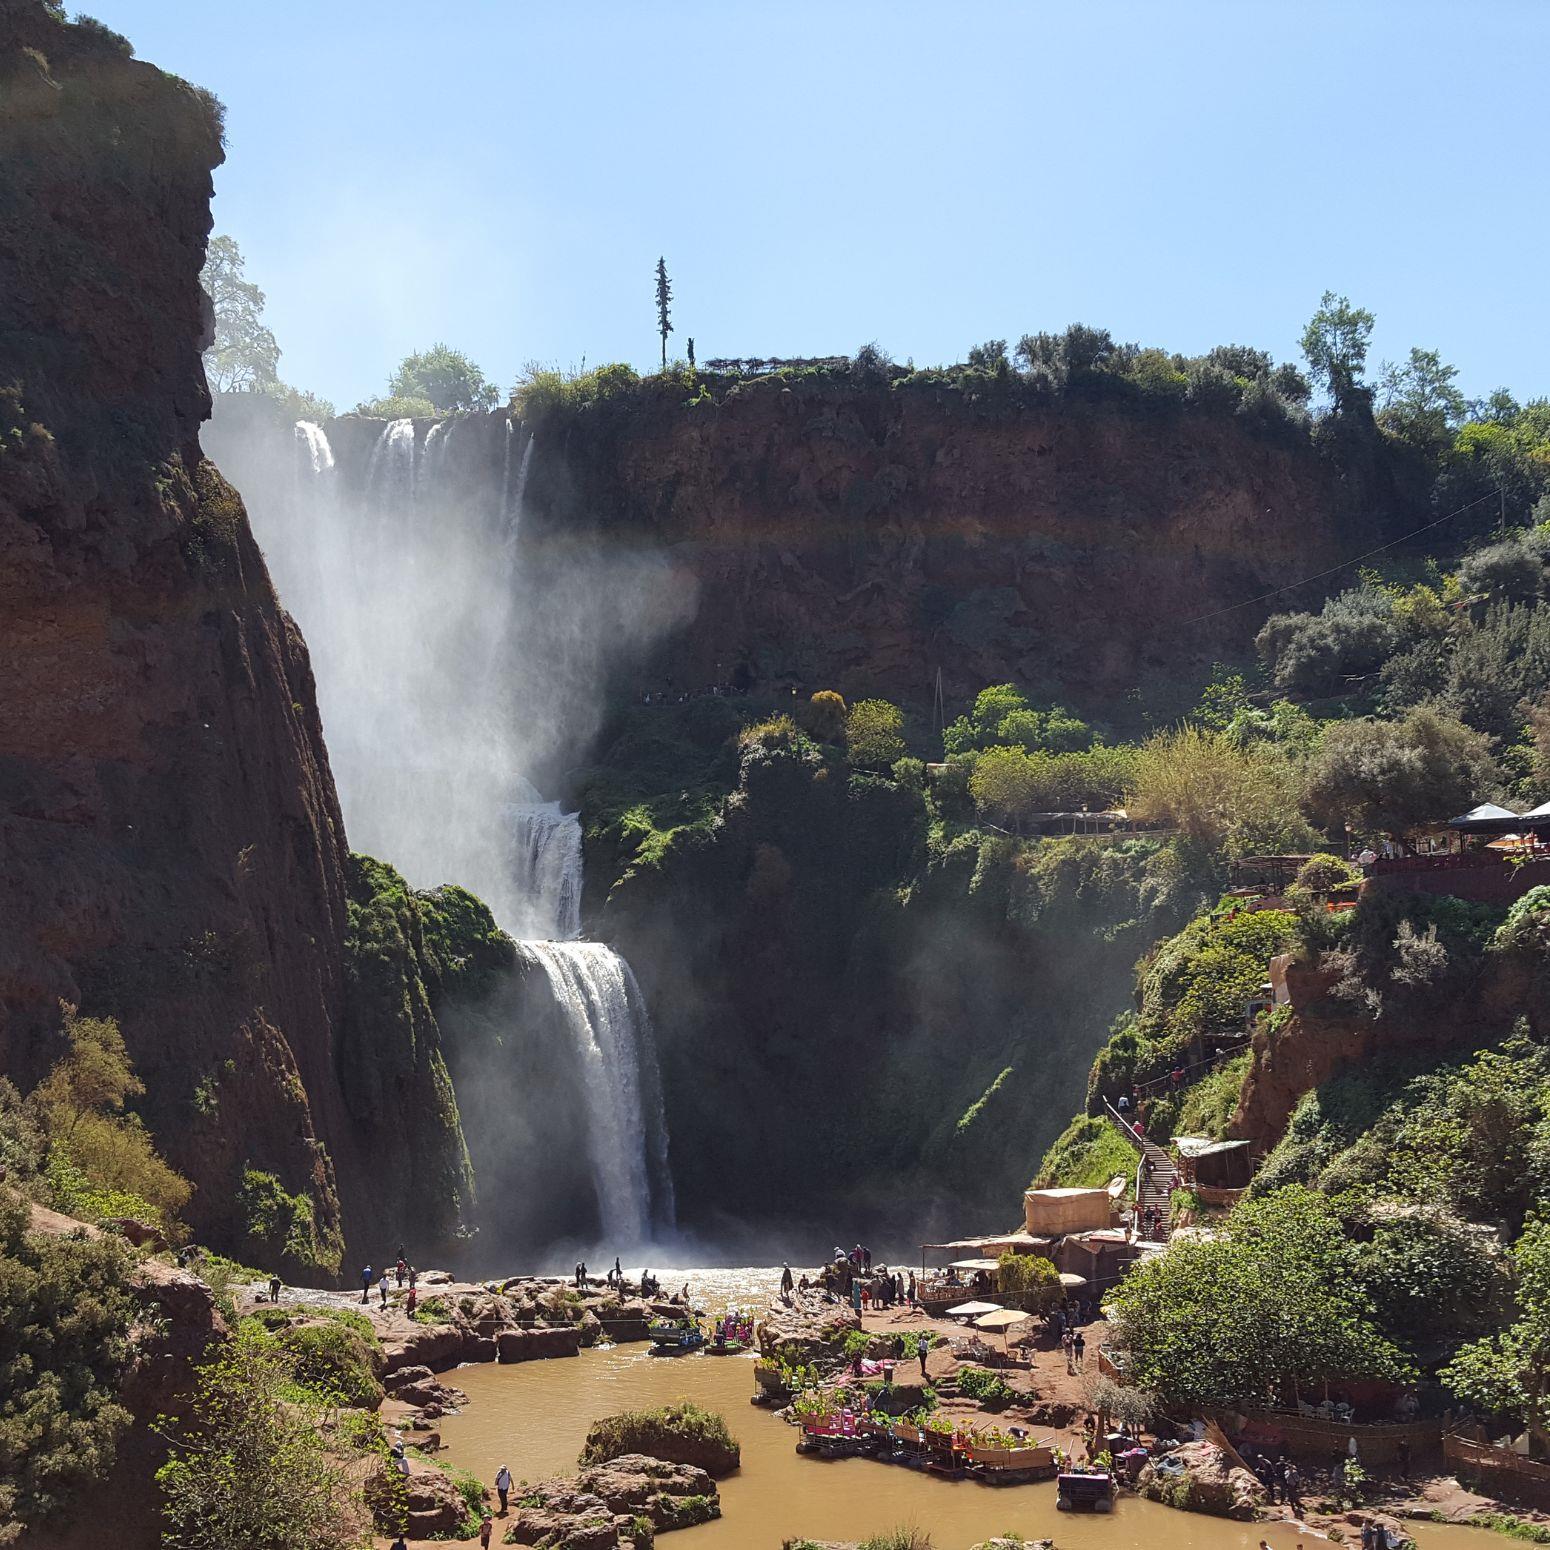 Excursion to the Ouzoud Waterfalls